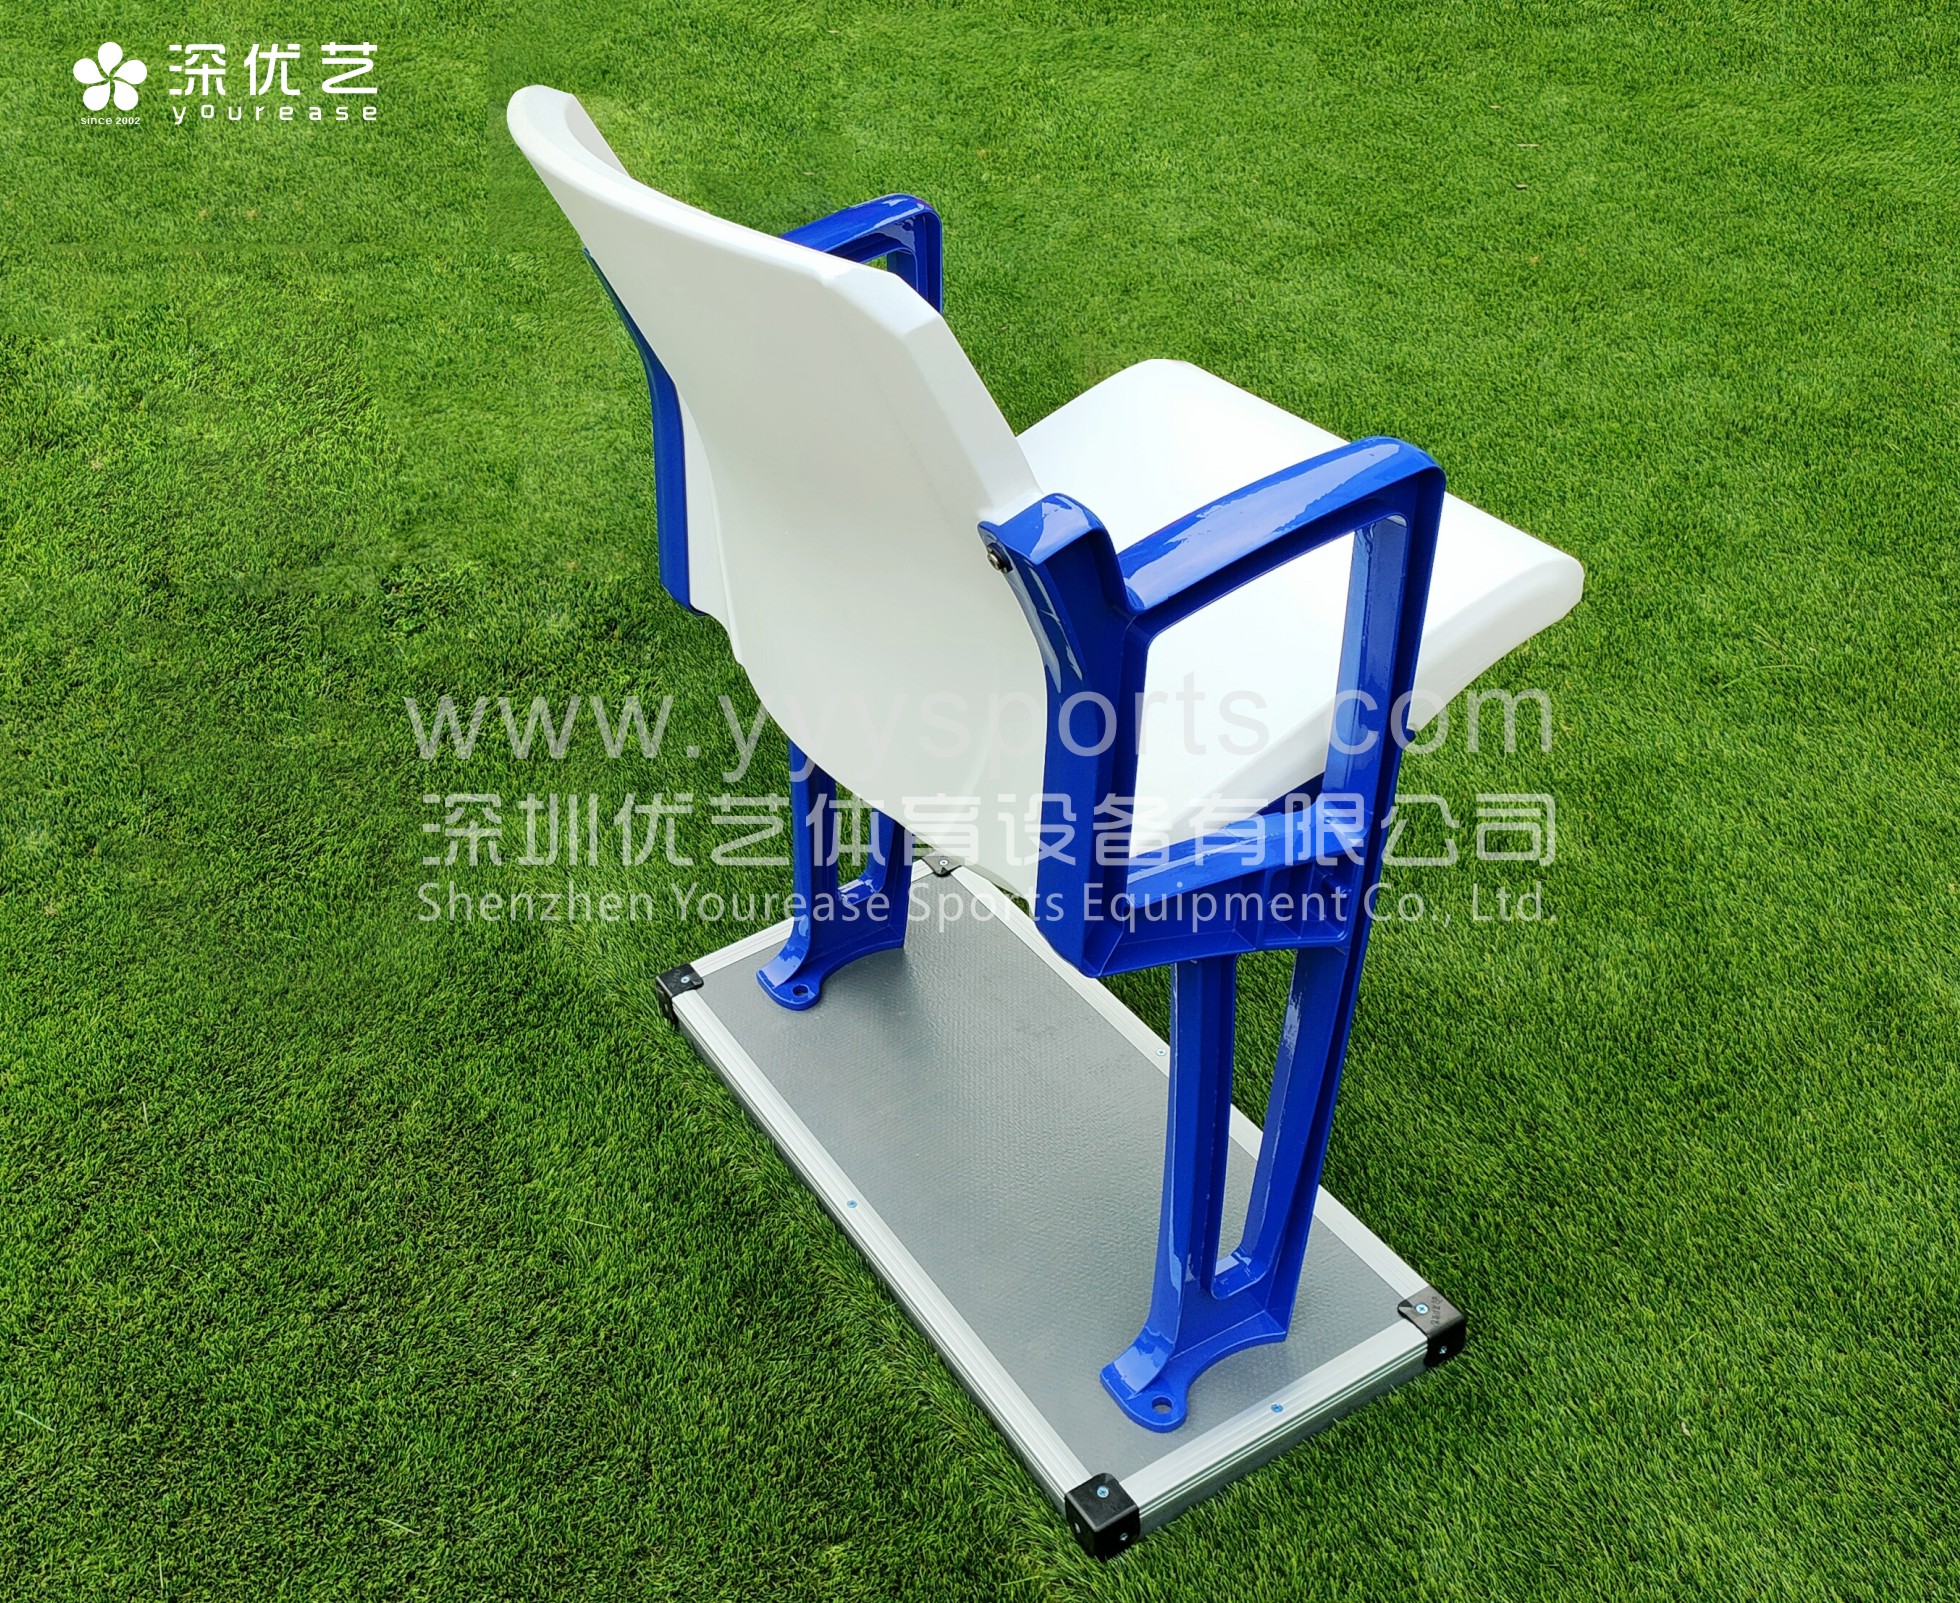 Yourease Football Plastic Stadium Chair Price Featured Image